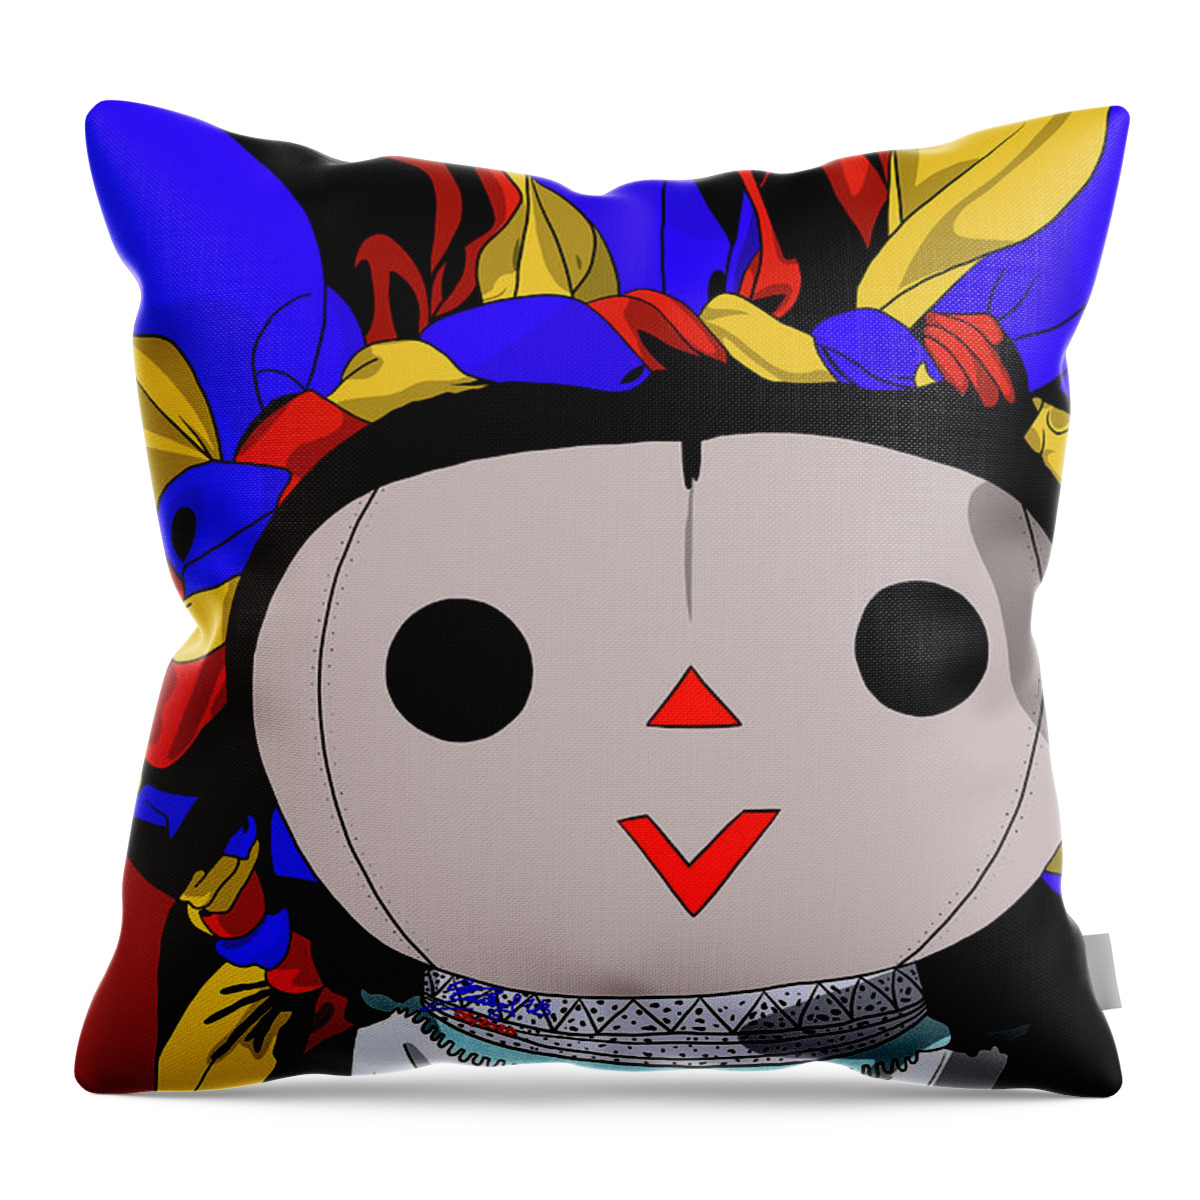 Mazahua Throw Pillow featuring the digital art Maria Doll yellow blue red by Marisol VB